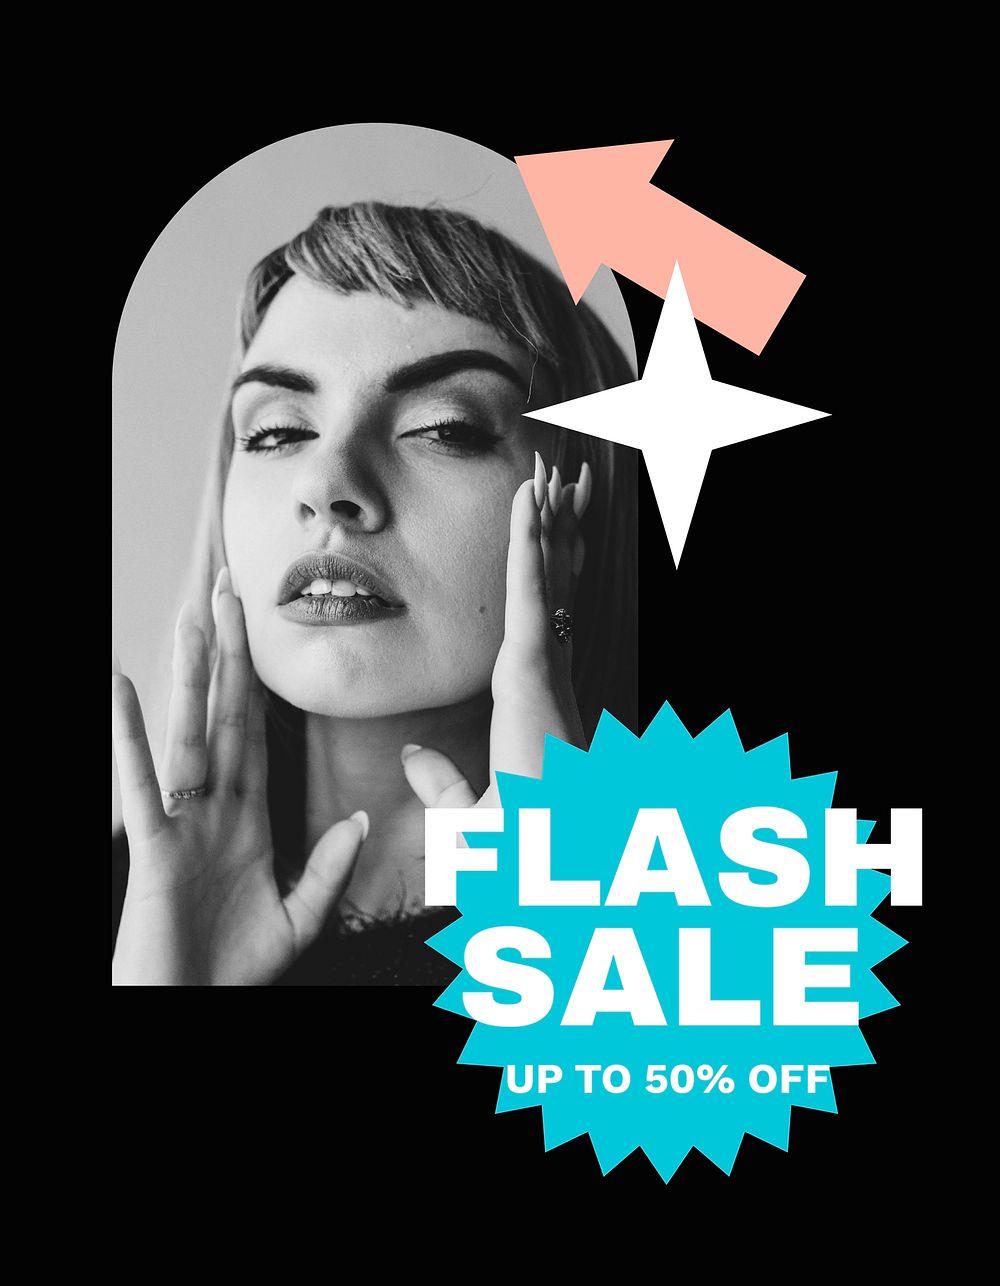 Flash sale flyer editable template, fashion, shopping ad psd